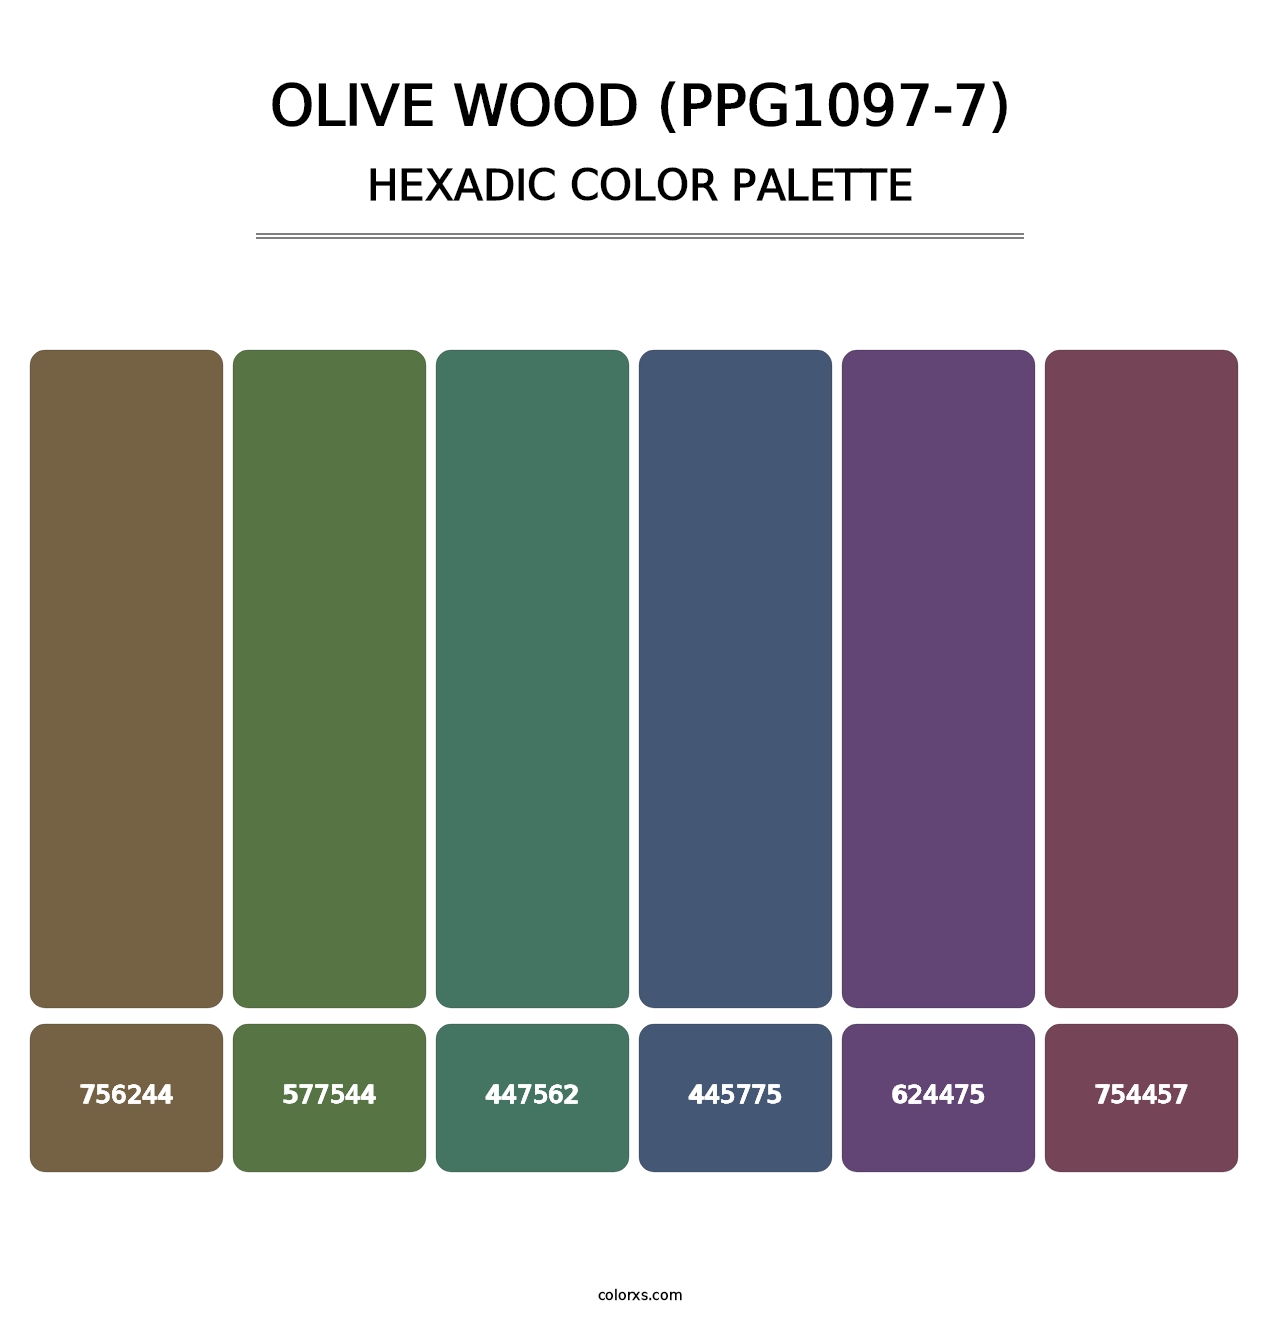 Olive Wood (PPG1097-7) - Hexadic Color Palette